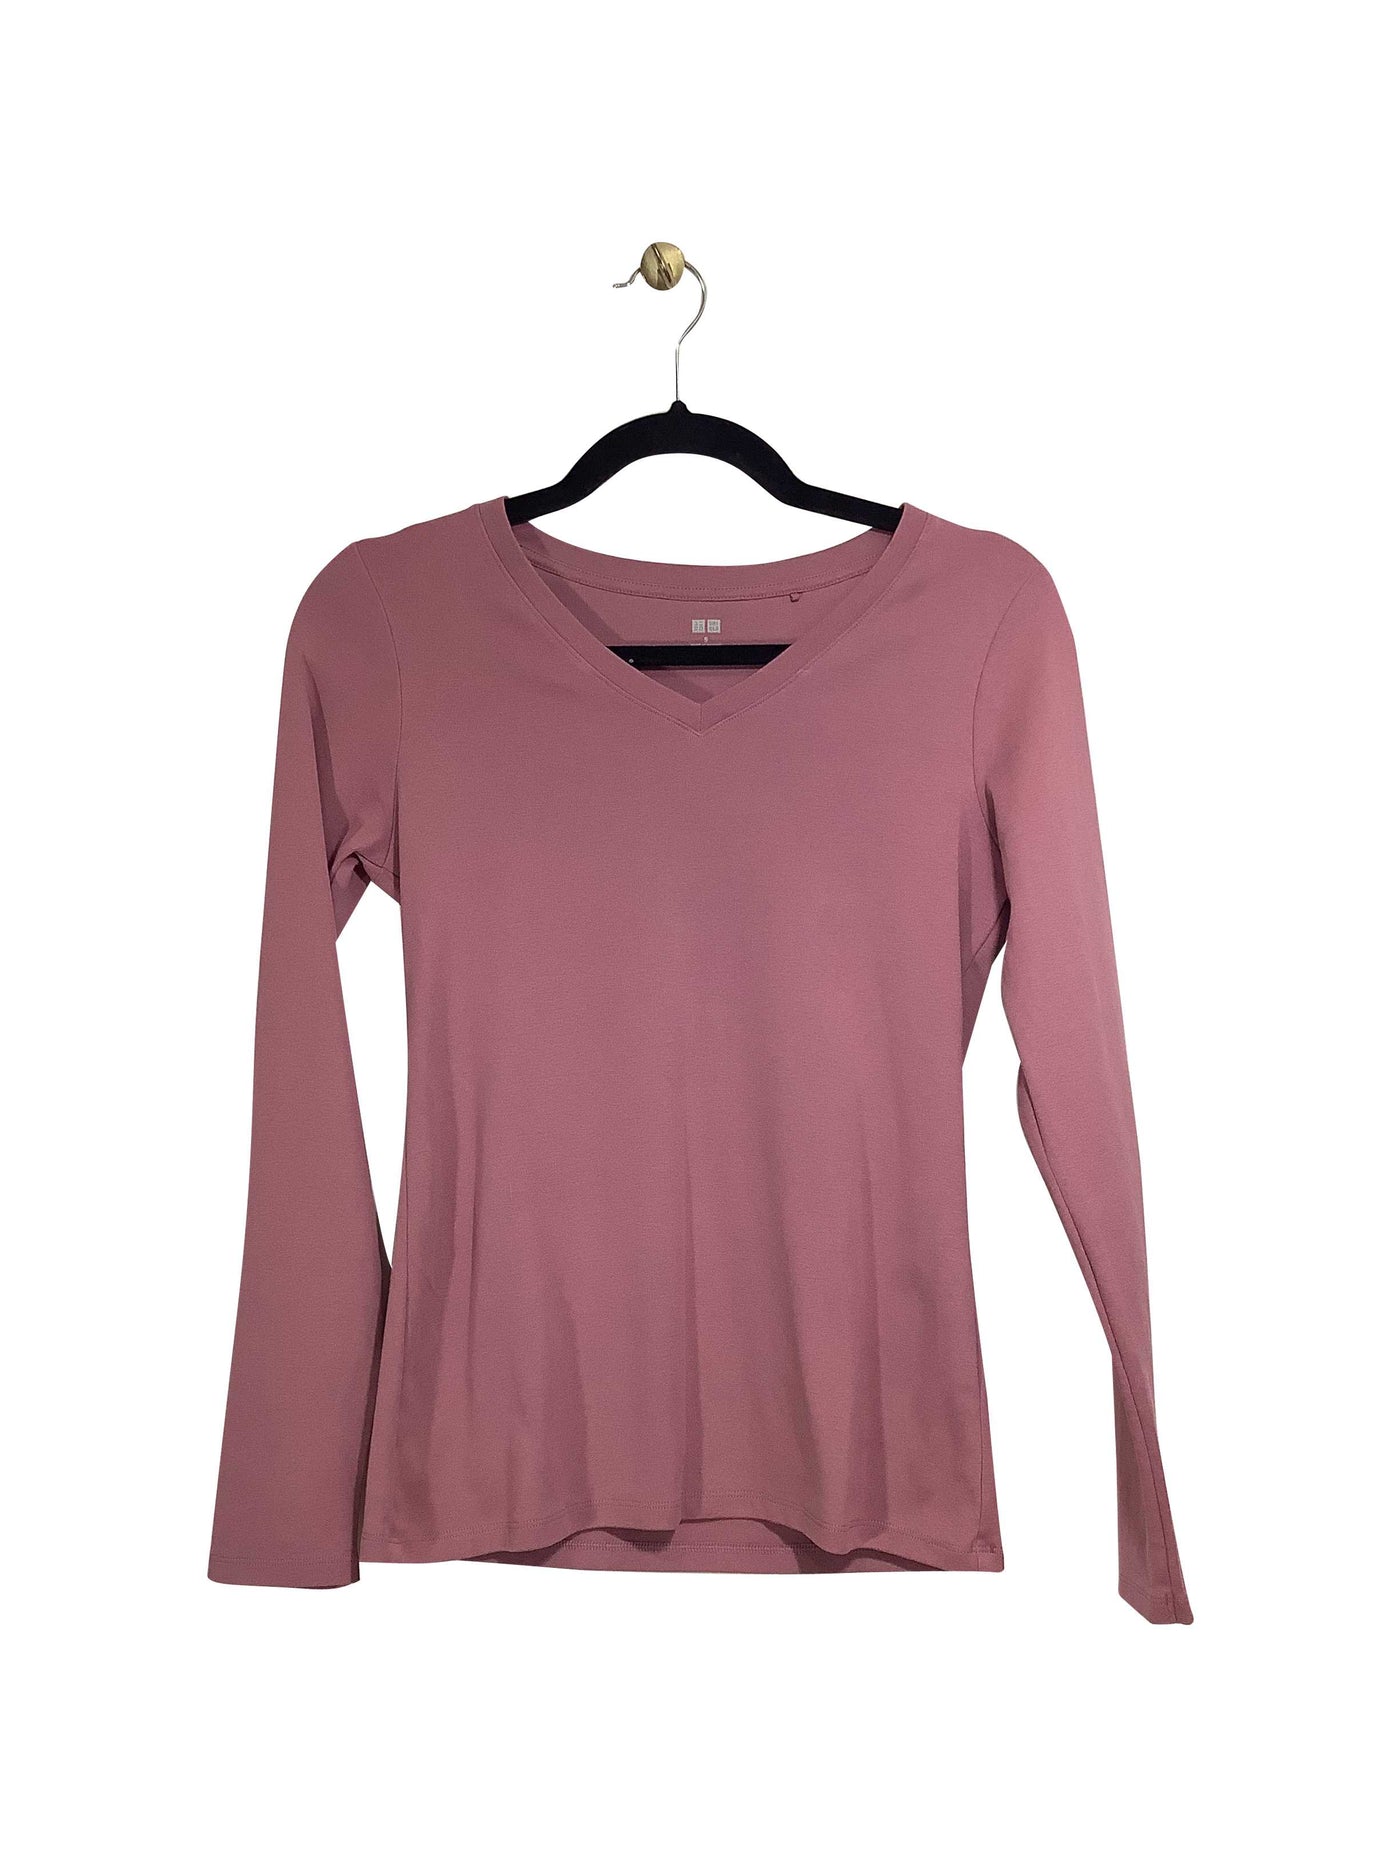 UNIQLO Regular fit T-shirt in Pink - Size S | 7.99 $ KOOP